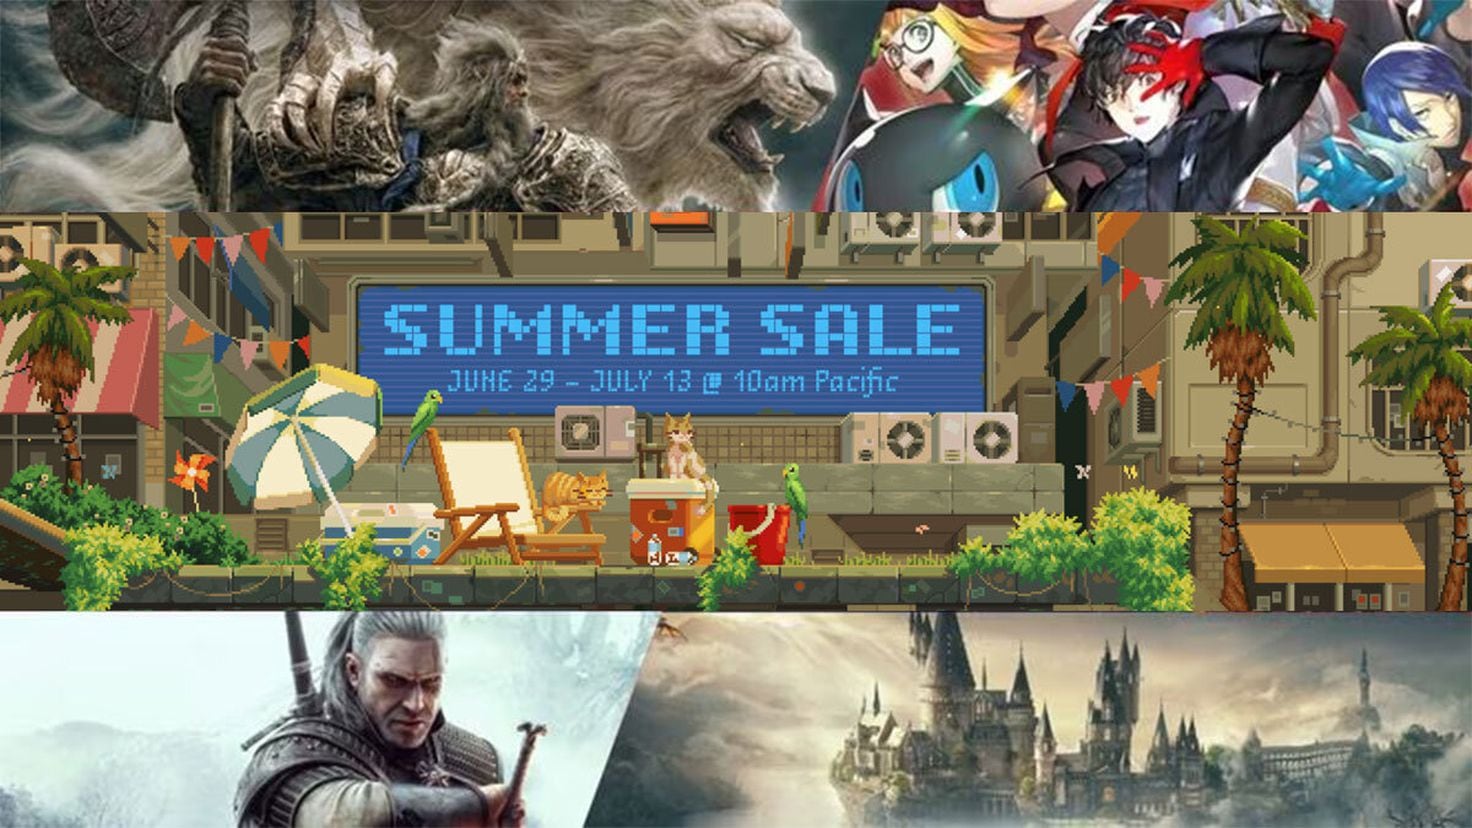 Steam Summer Sale deals churn out 3 crazy platform games that put fun  before sanity -  News